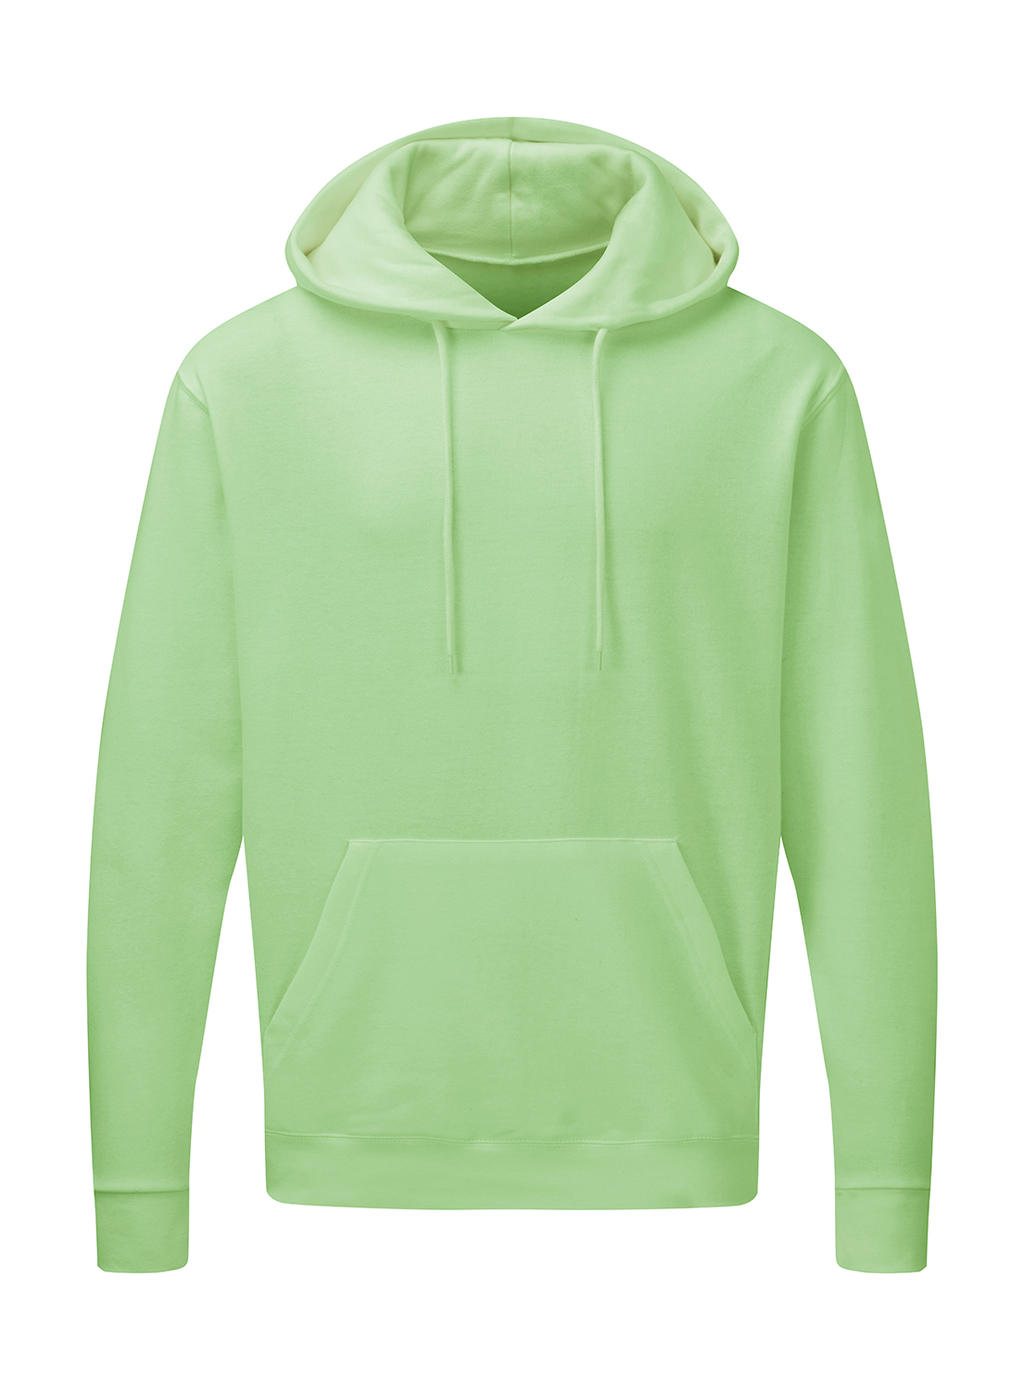  Mens Hooded Sweatshirt in Farbe Neo Mint